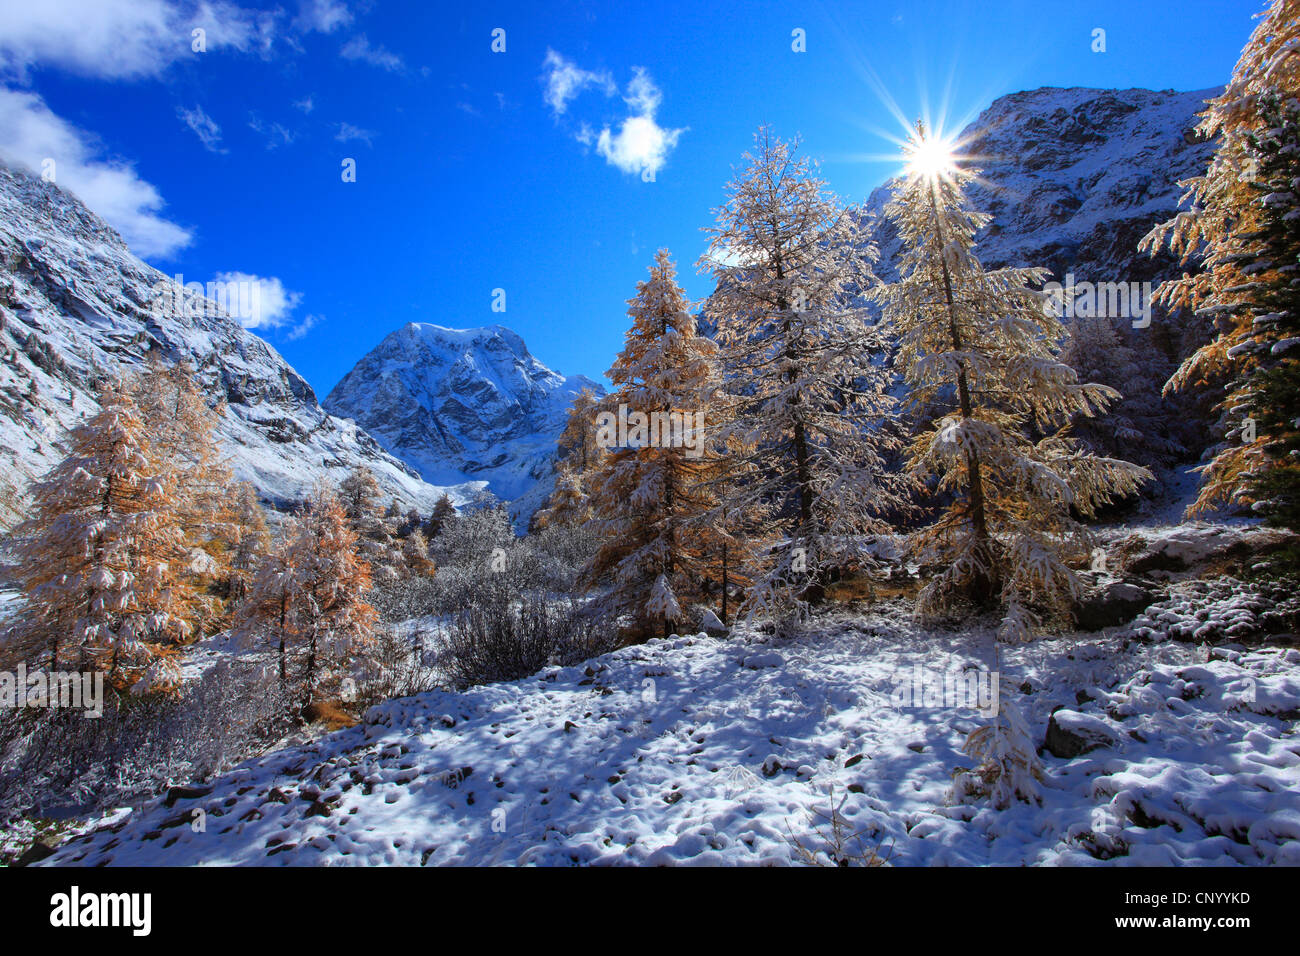 snowy mountain scenery with Mount Collon, Arolla valley, Switzerland, Valais Stock Photo